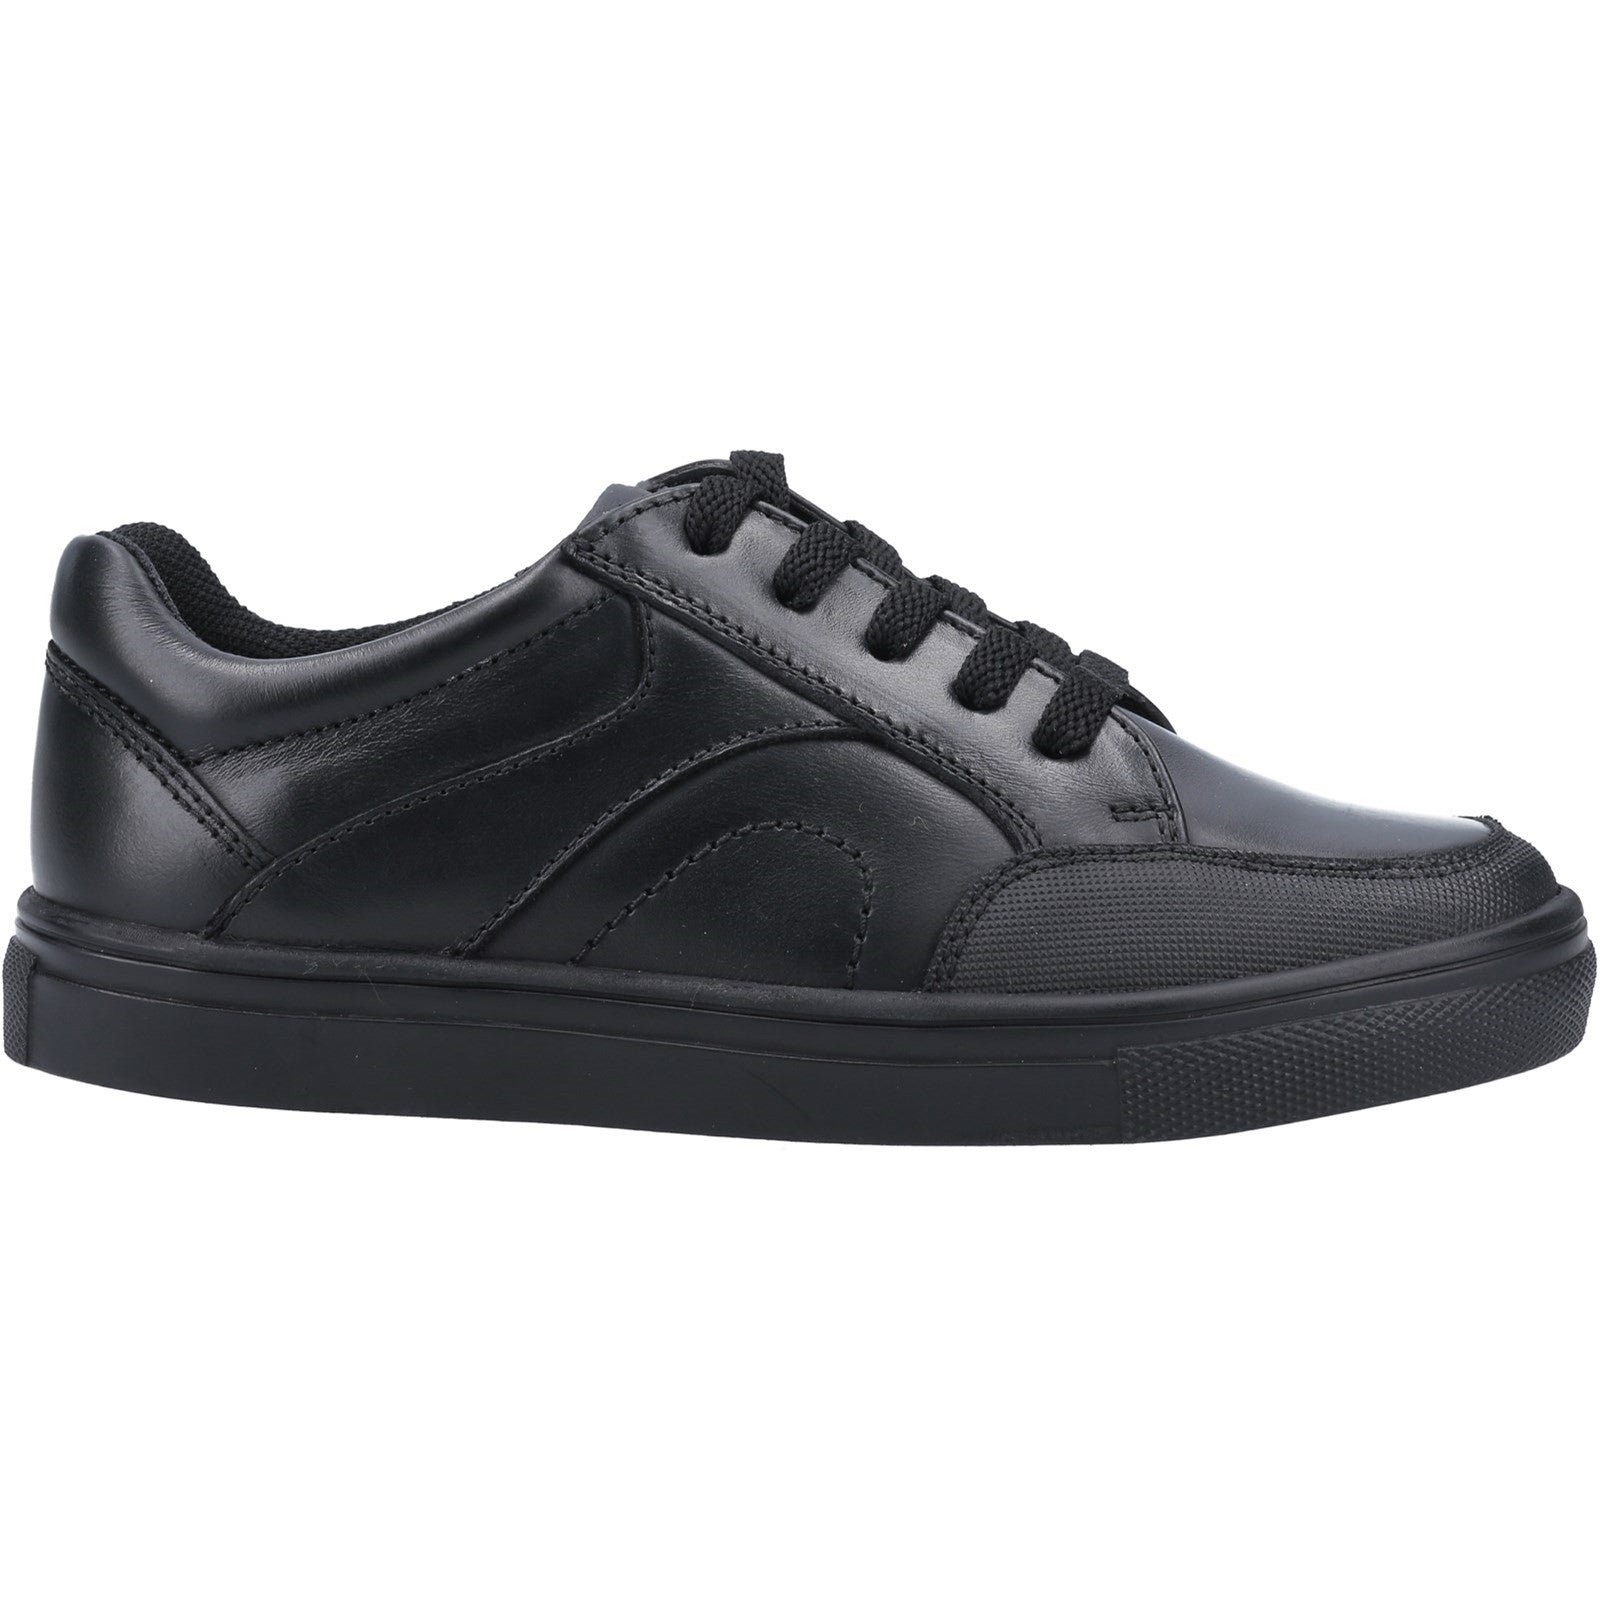 Hush Puppies Boys Shawn Leather School Shoes - Black